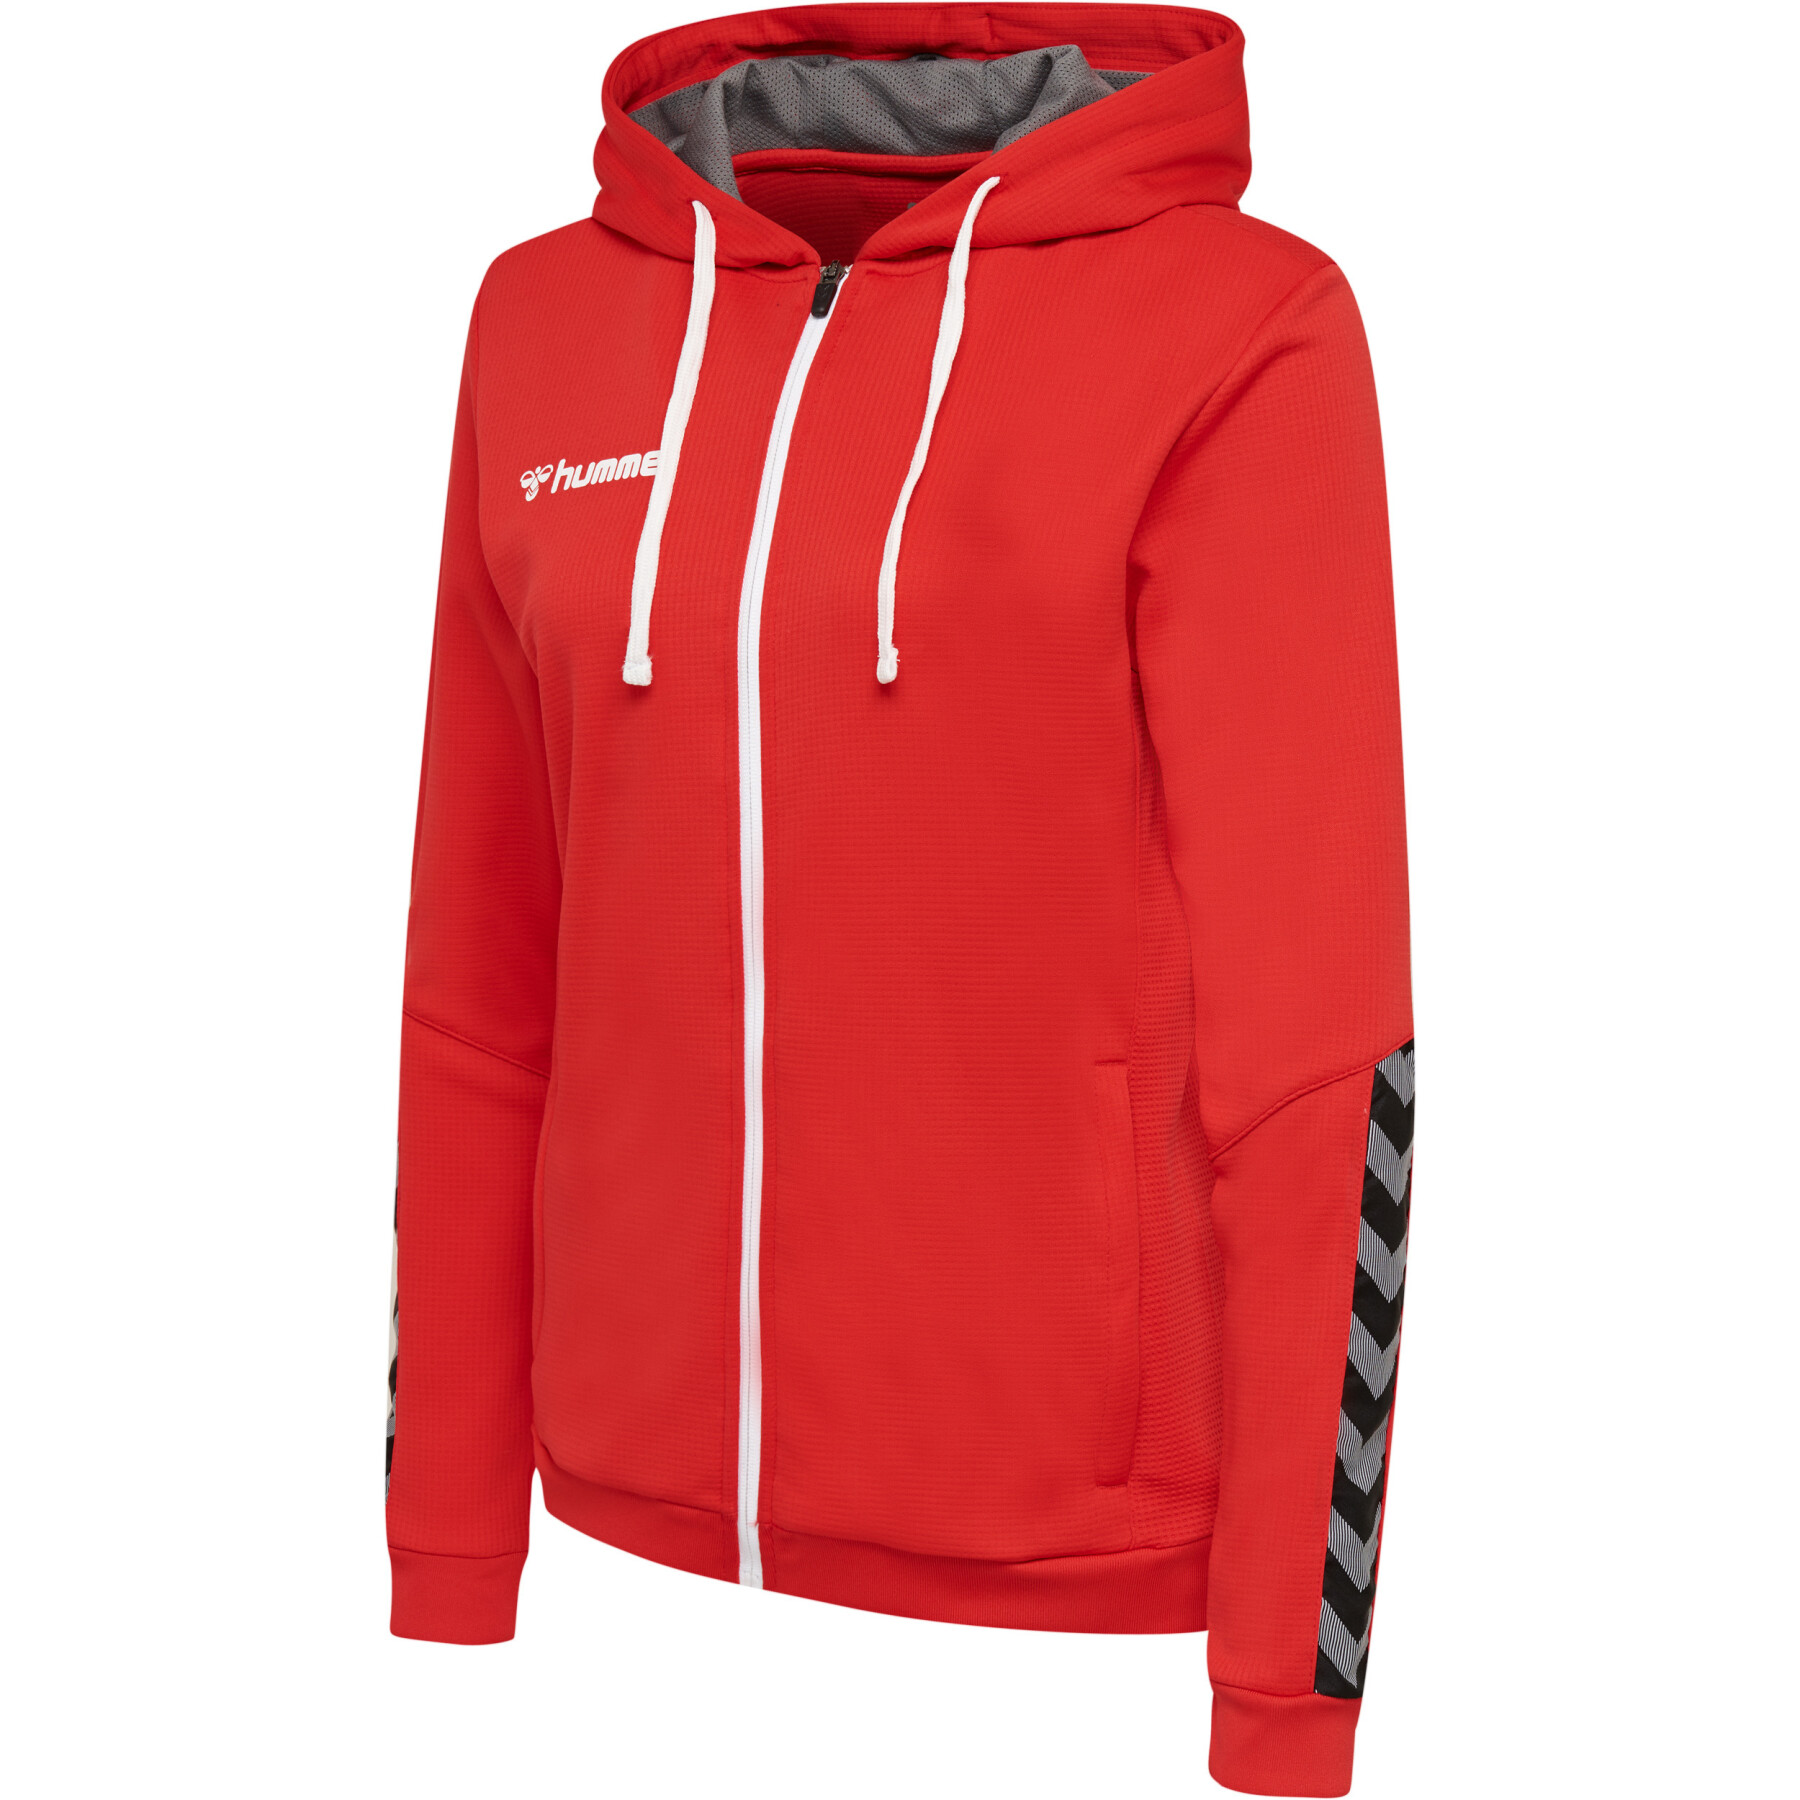 Women's hooded sweatshirt Hummel zip hmlAUTHENTIC Poly - Hummel - Brands -  Handball wear